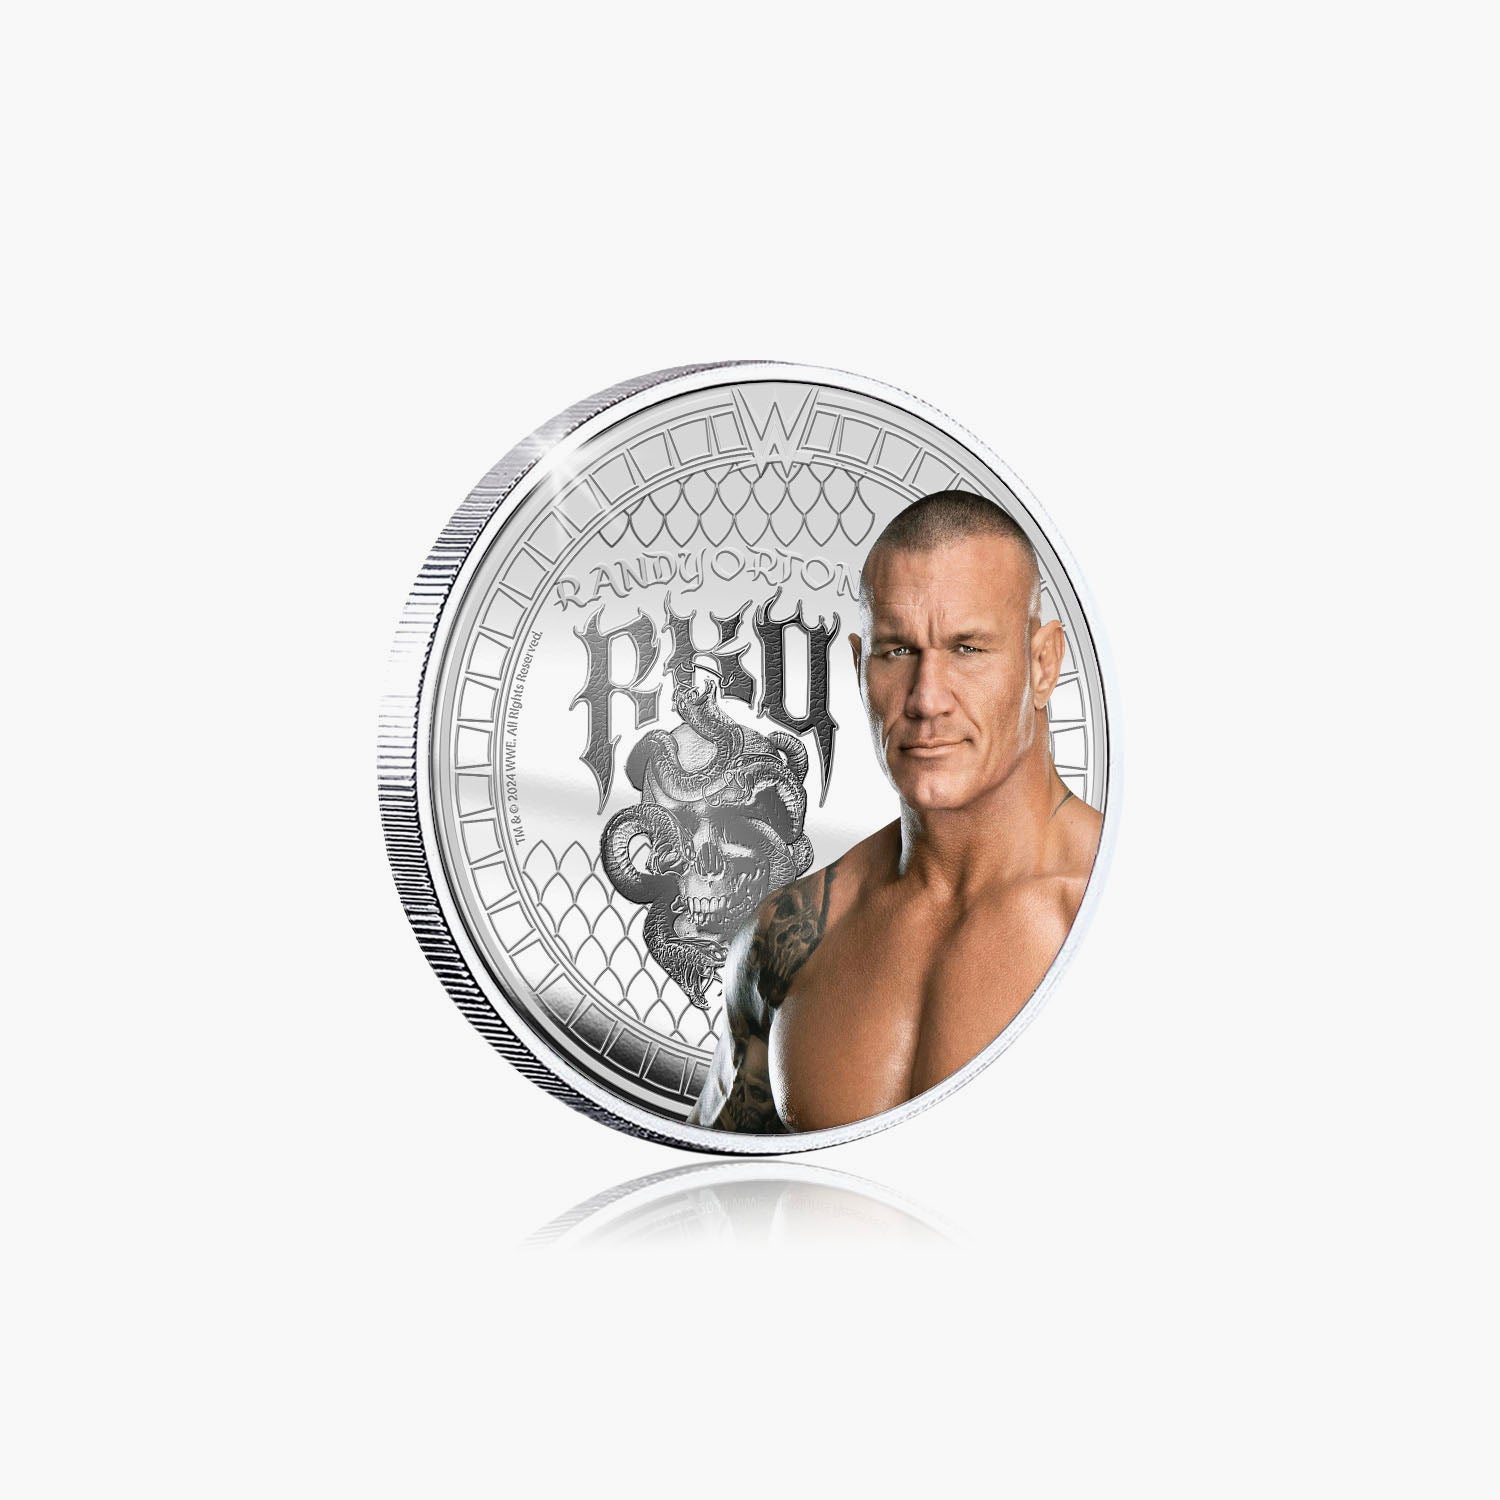 WWE Commemorative Collection - Randy Orton - 32mm Silver Plated Commemorative